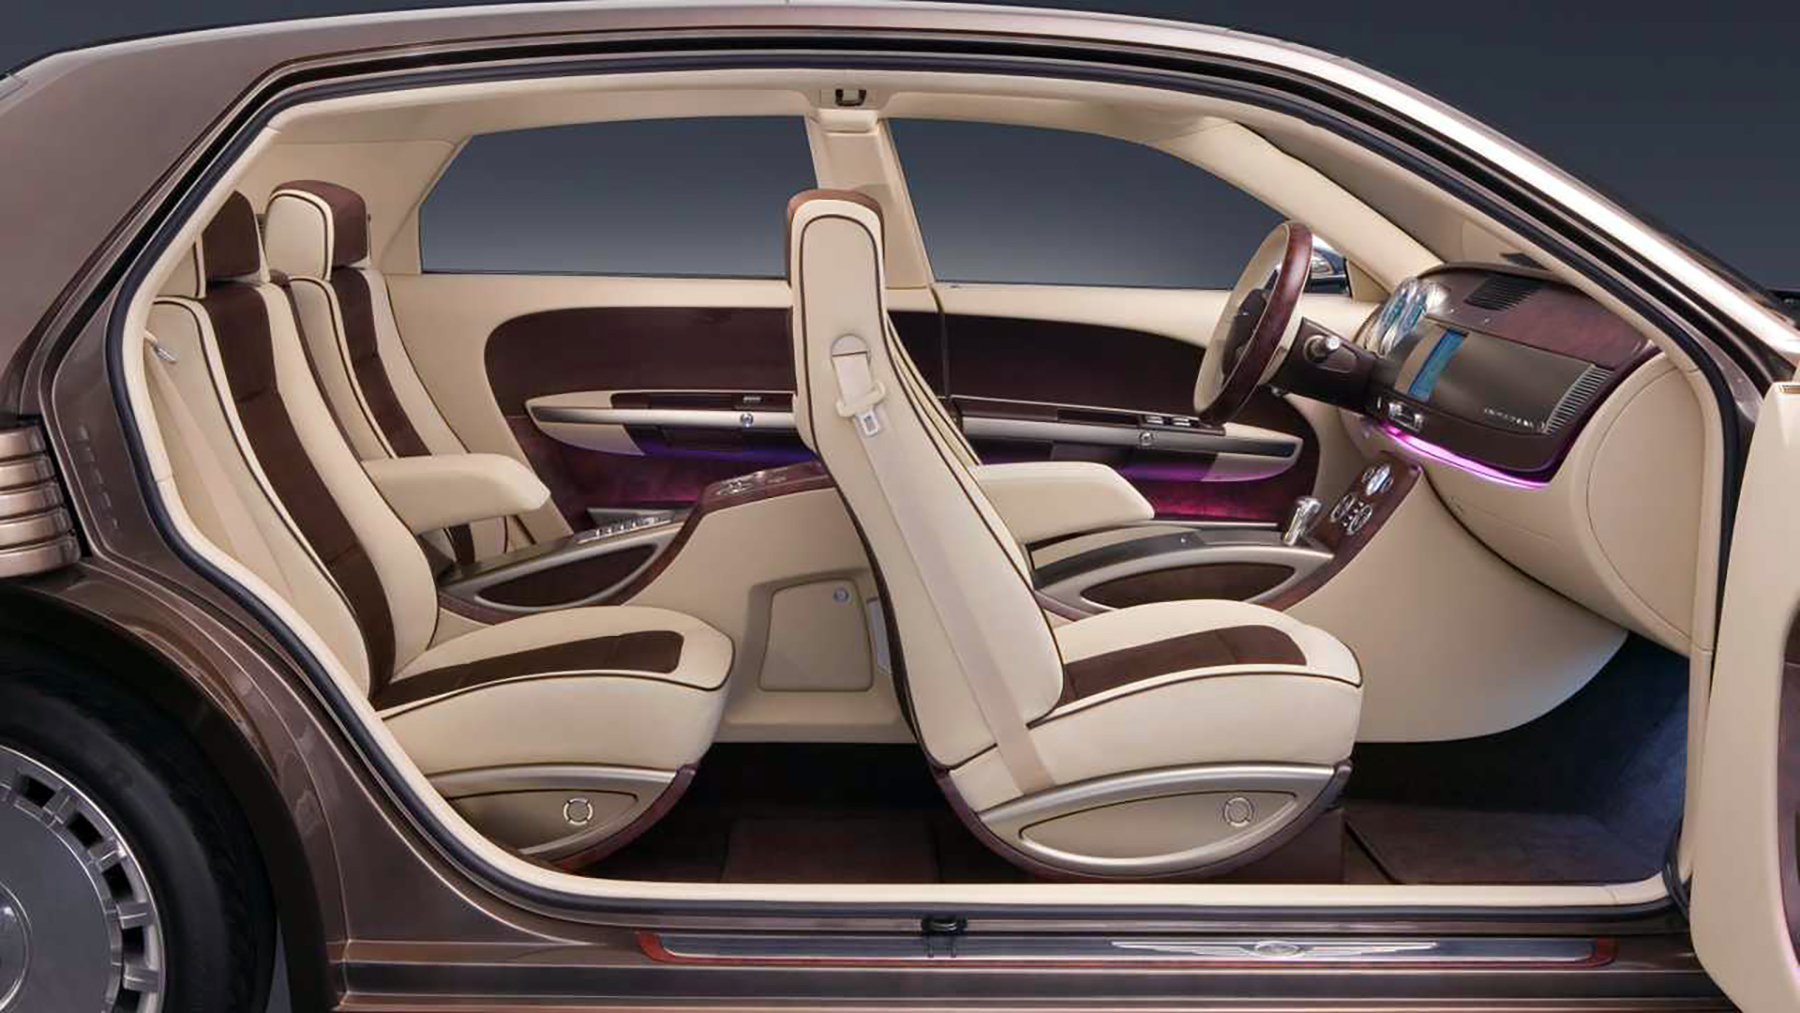 2006 Chrysler Imperial Concept Car 